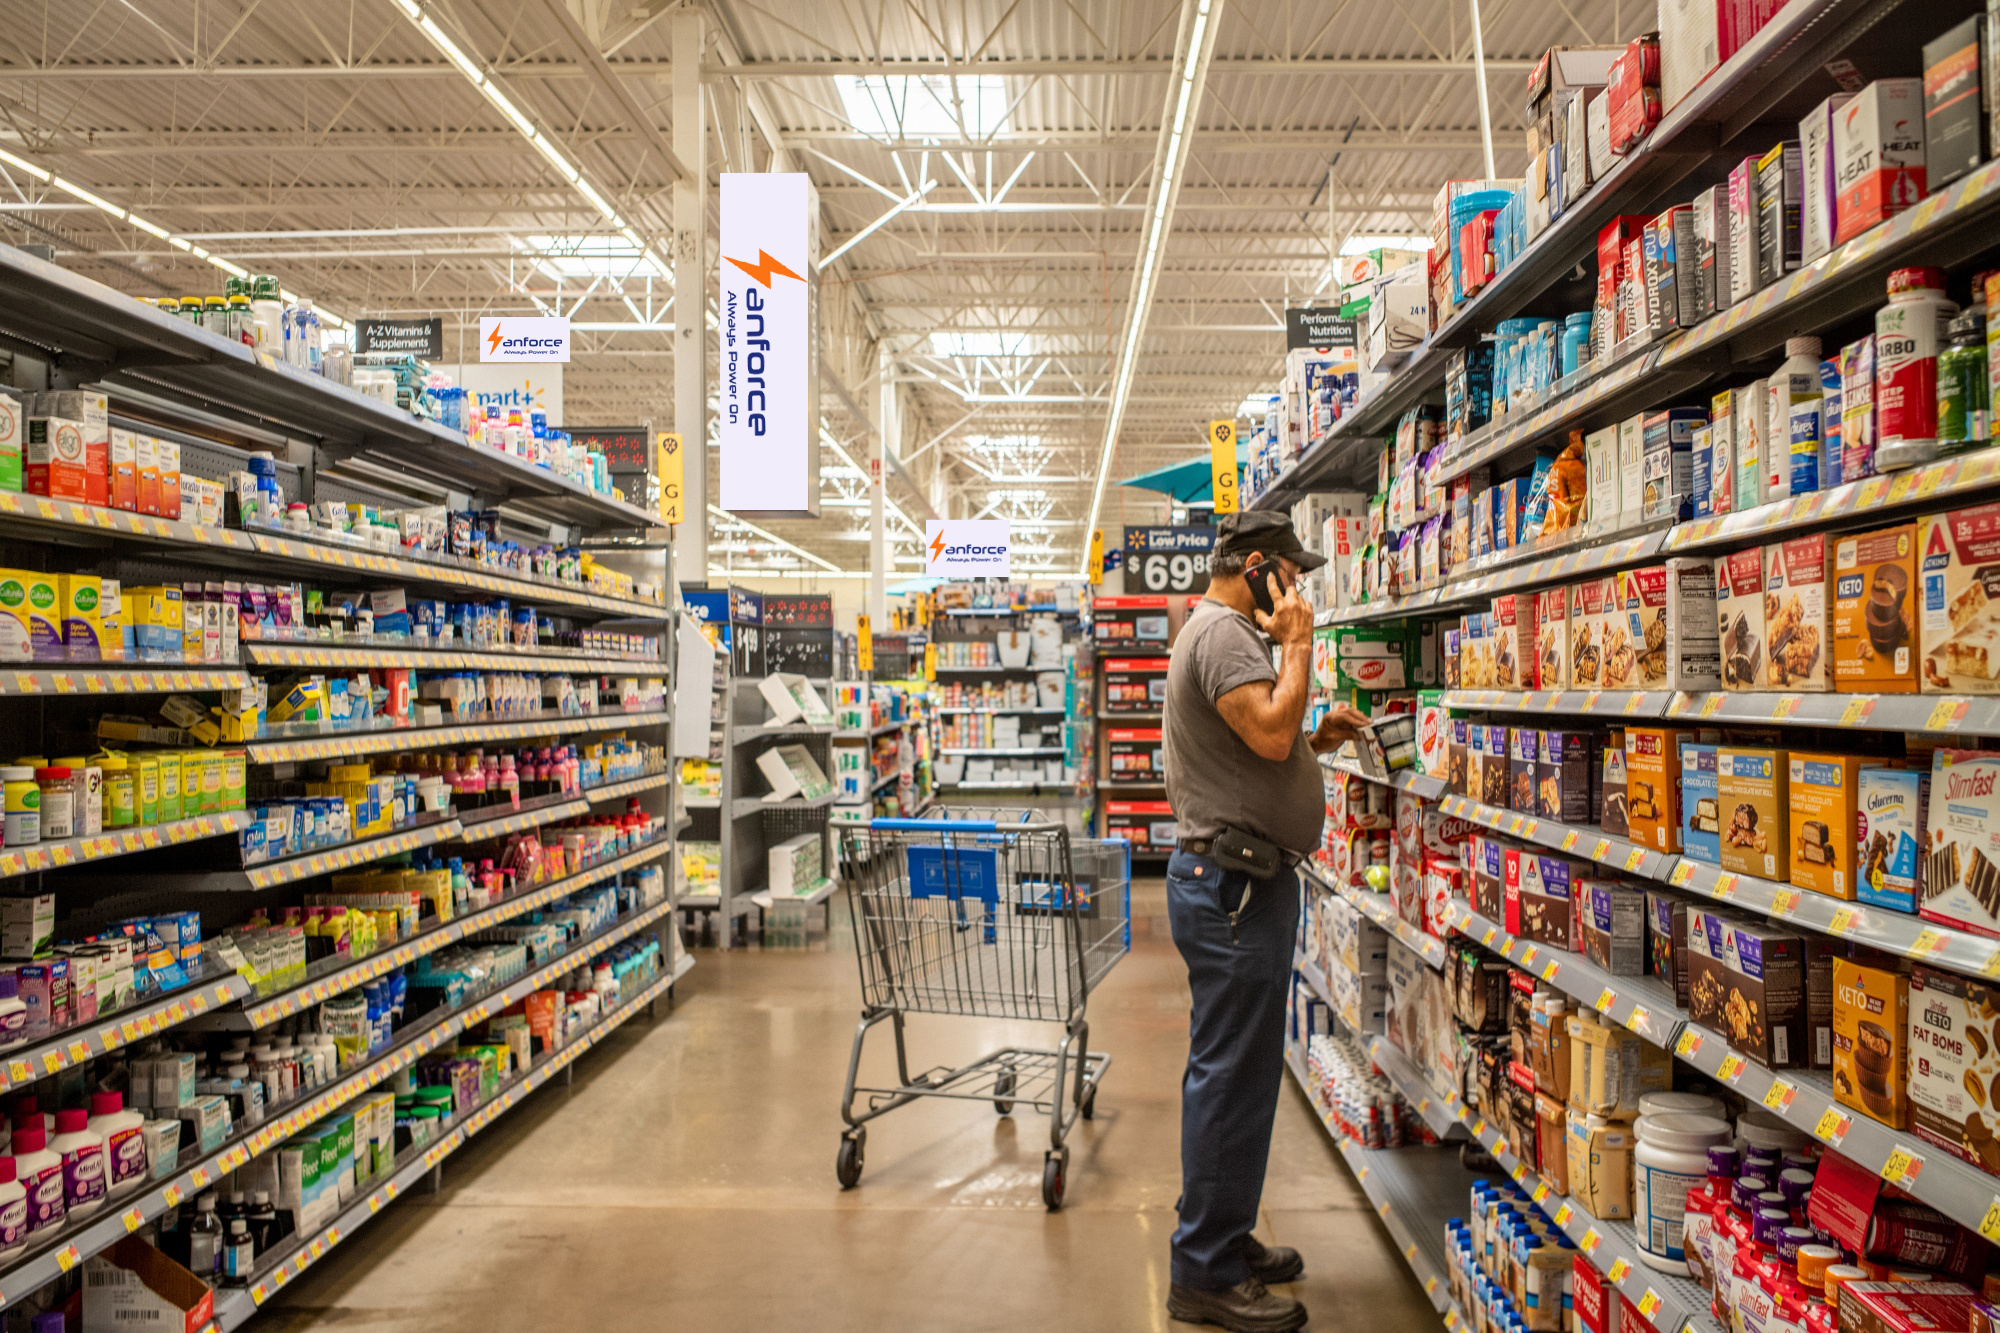 Emergency Lighting in Retail: Minimizing Risks During Store Emergencies